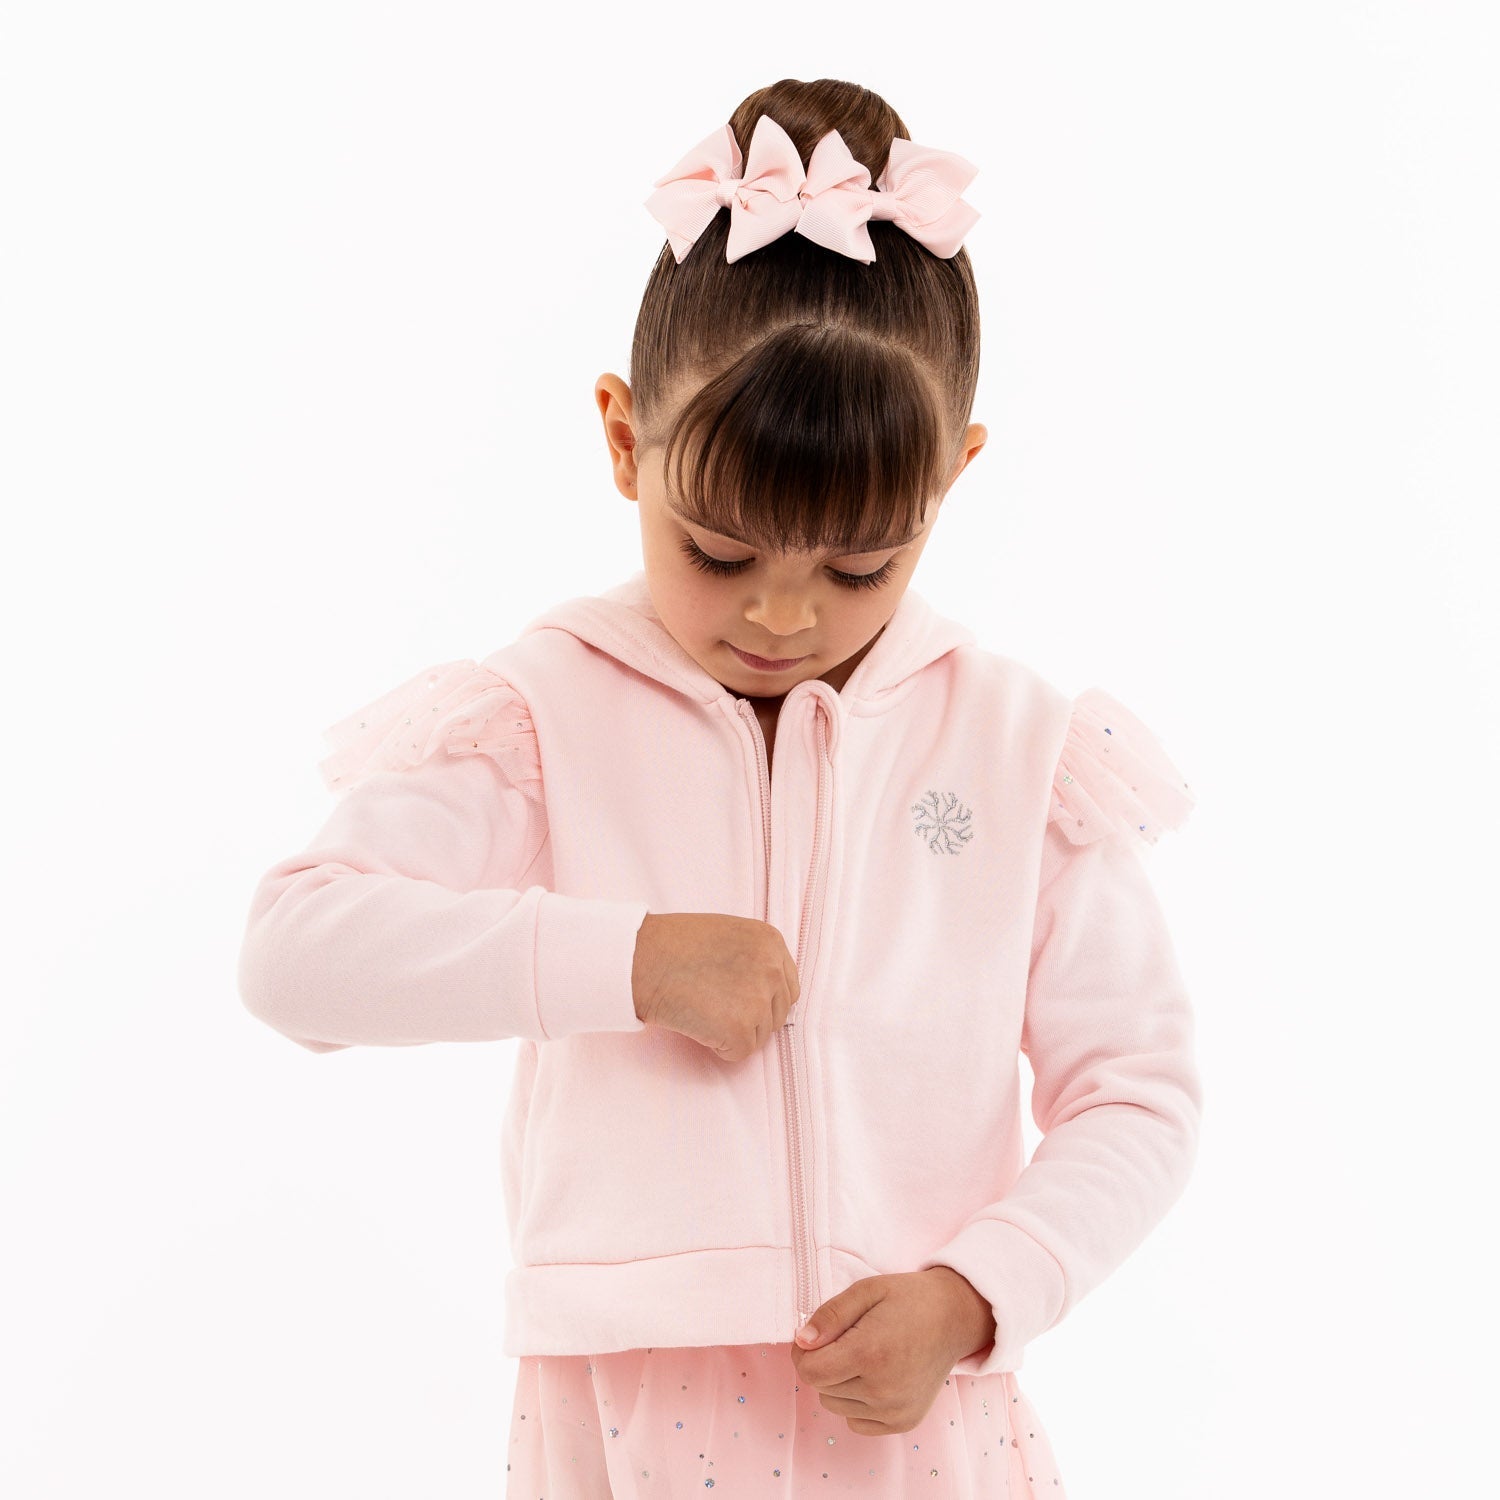 Flo Dancewear Toddler/Girls Evie Tulle Frill Hoodie in Pink